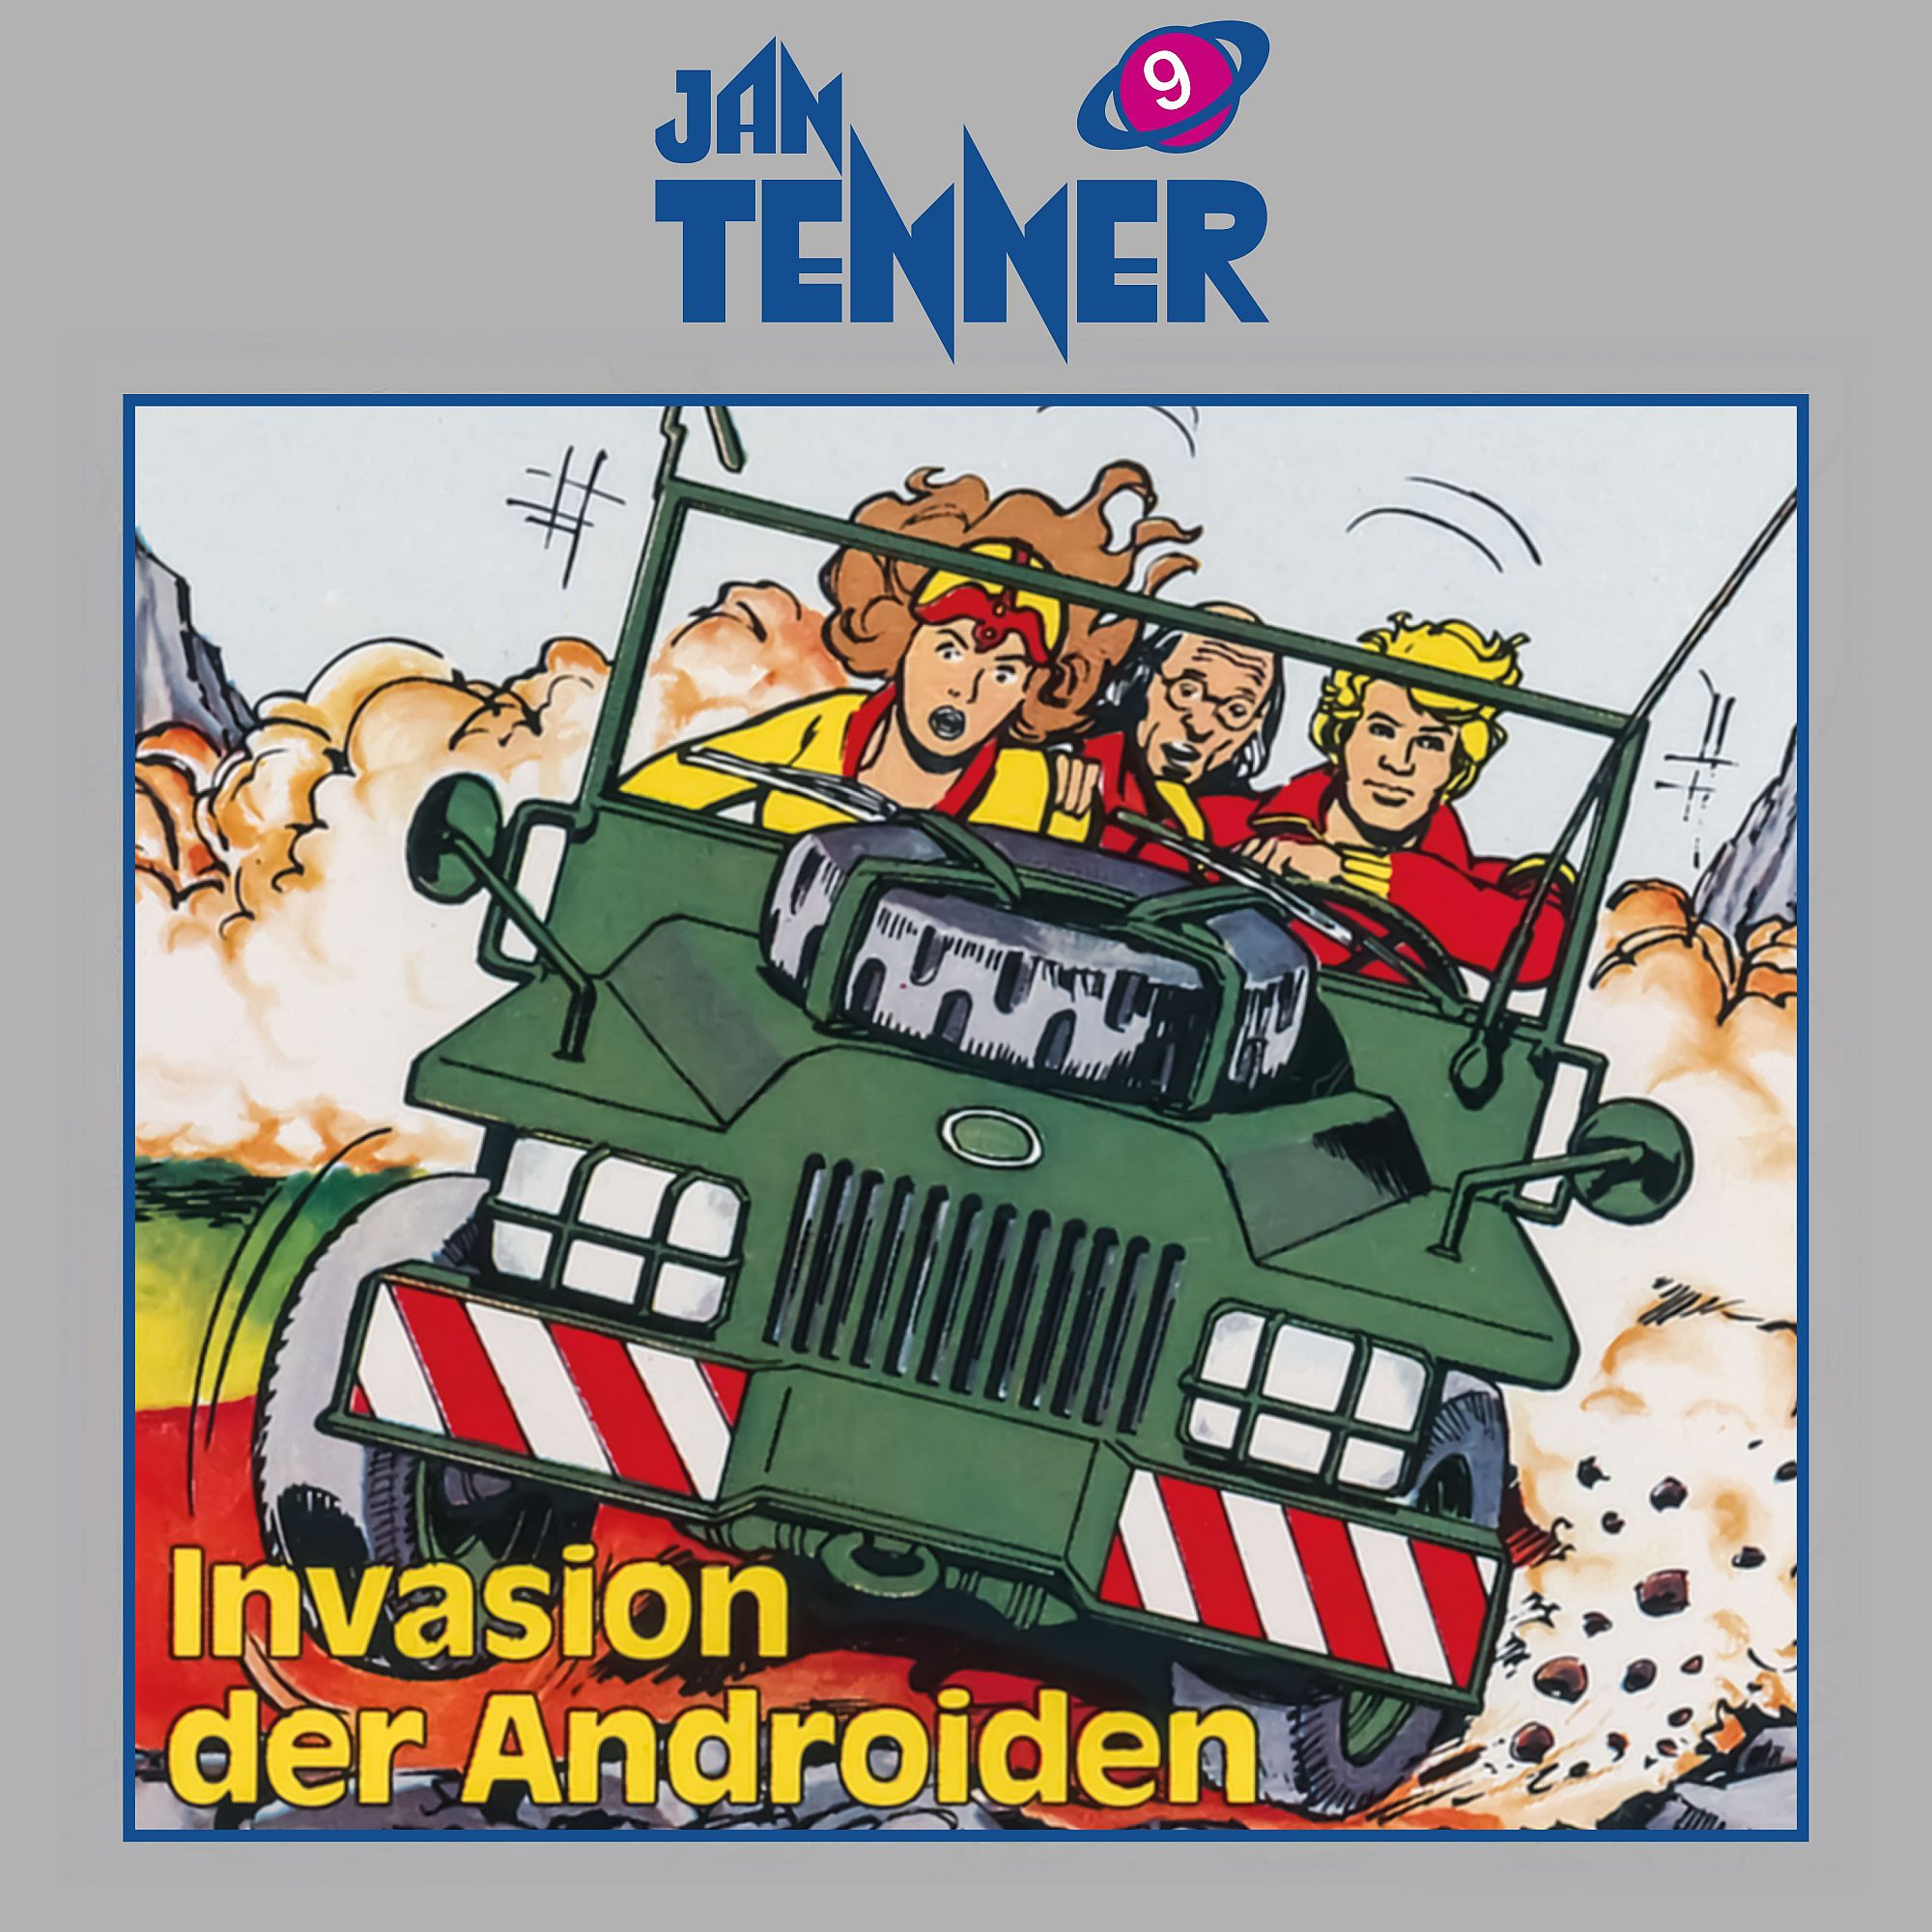 Jan Tenner Classics - Invasion der Androiden (9)